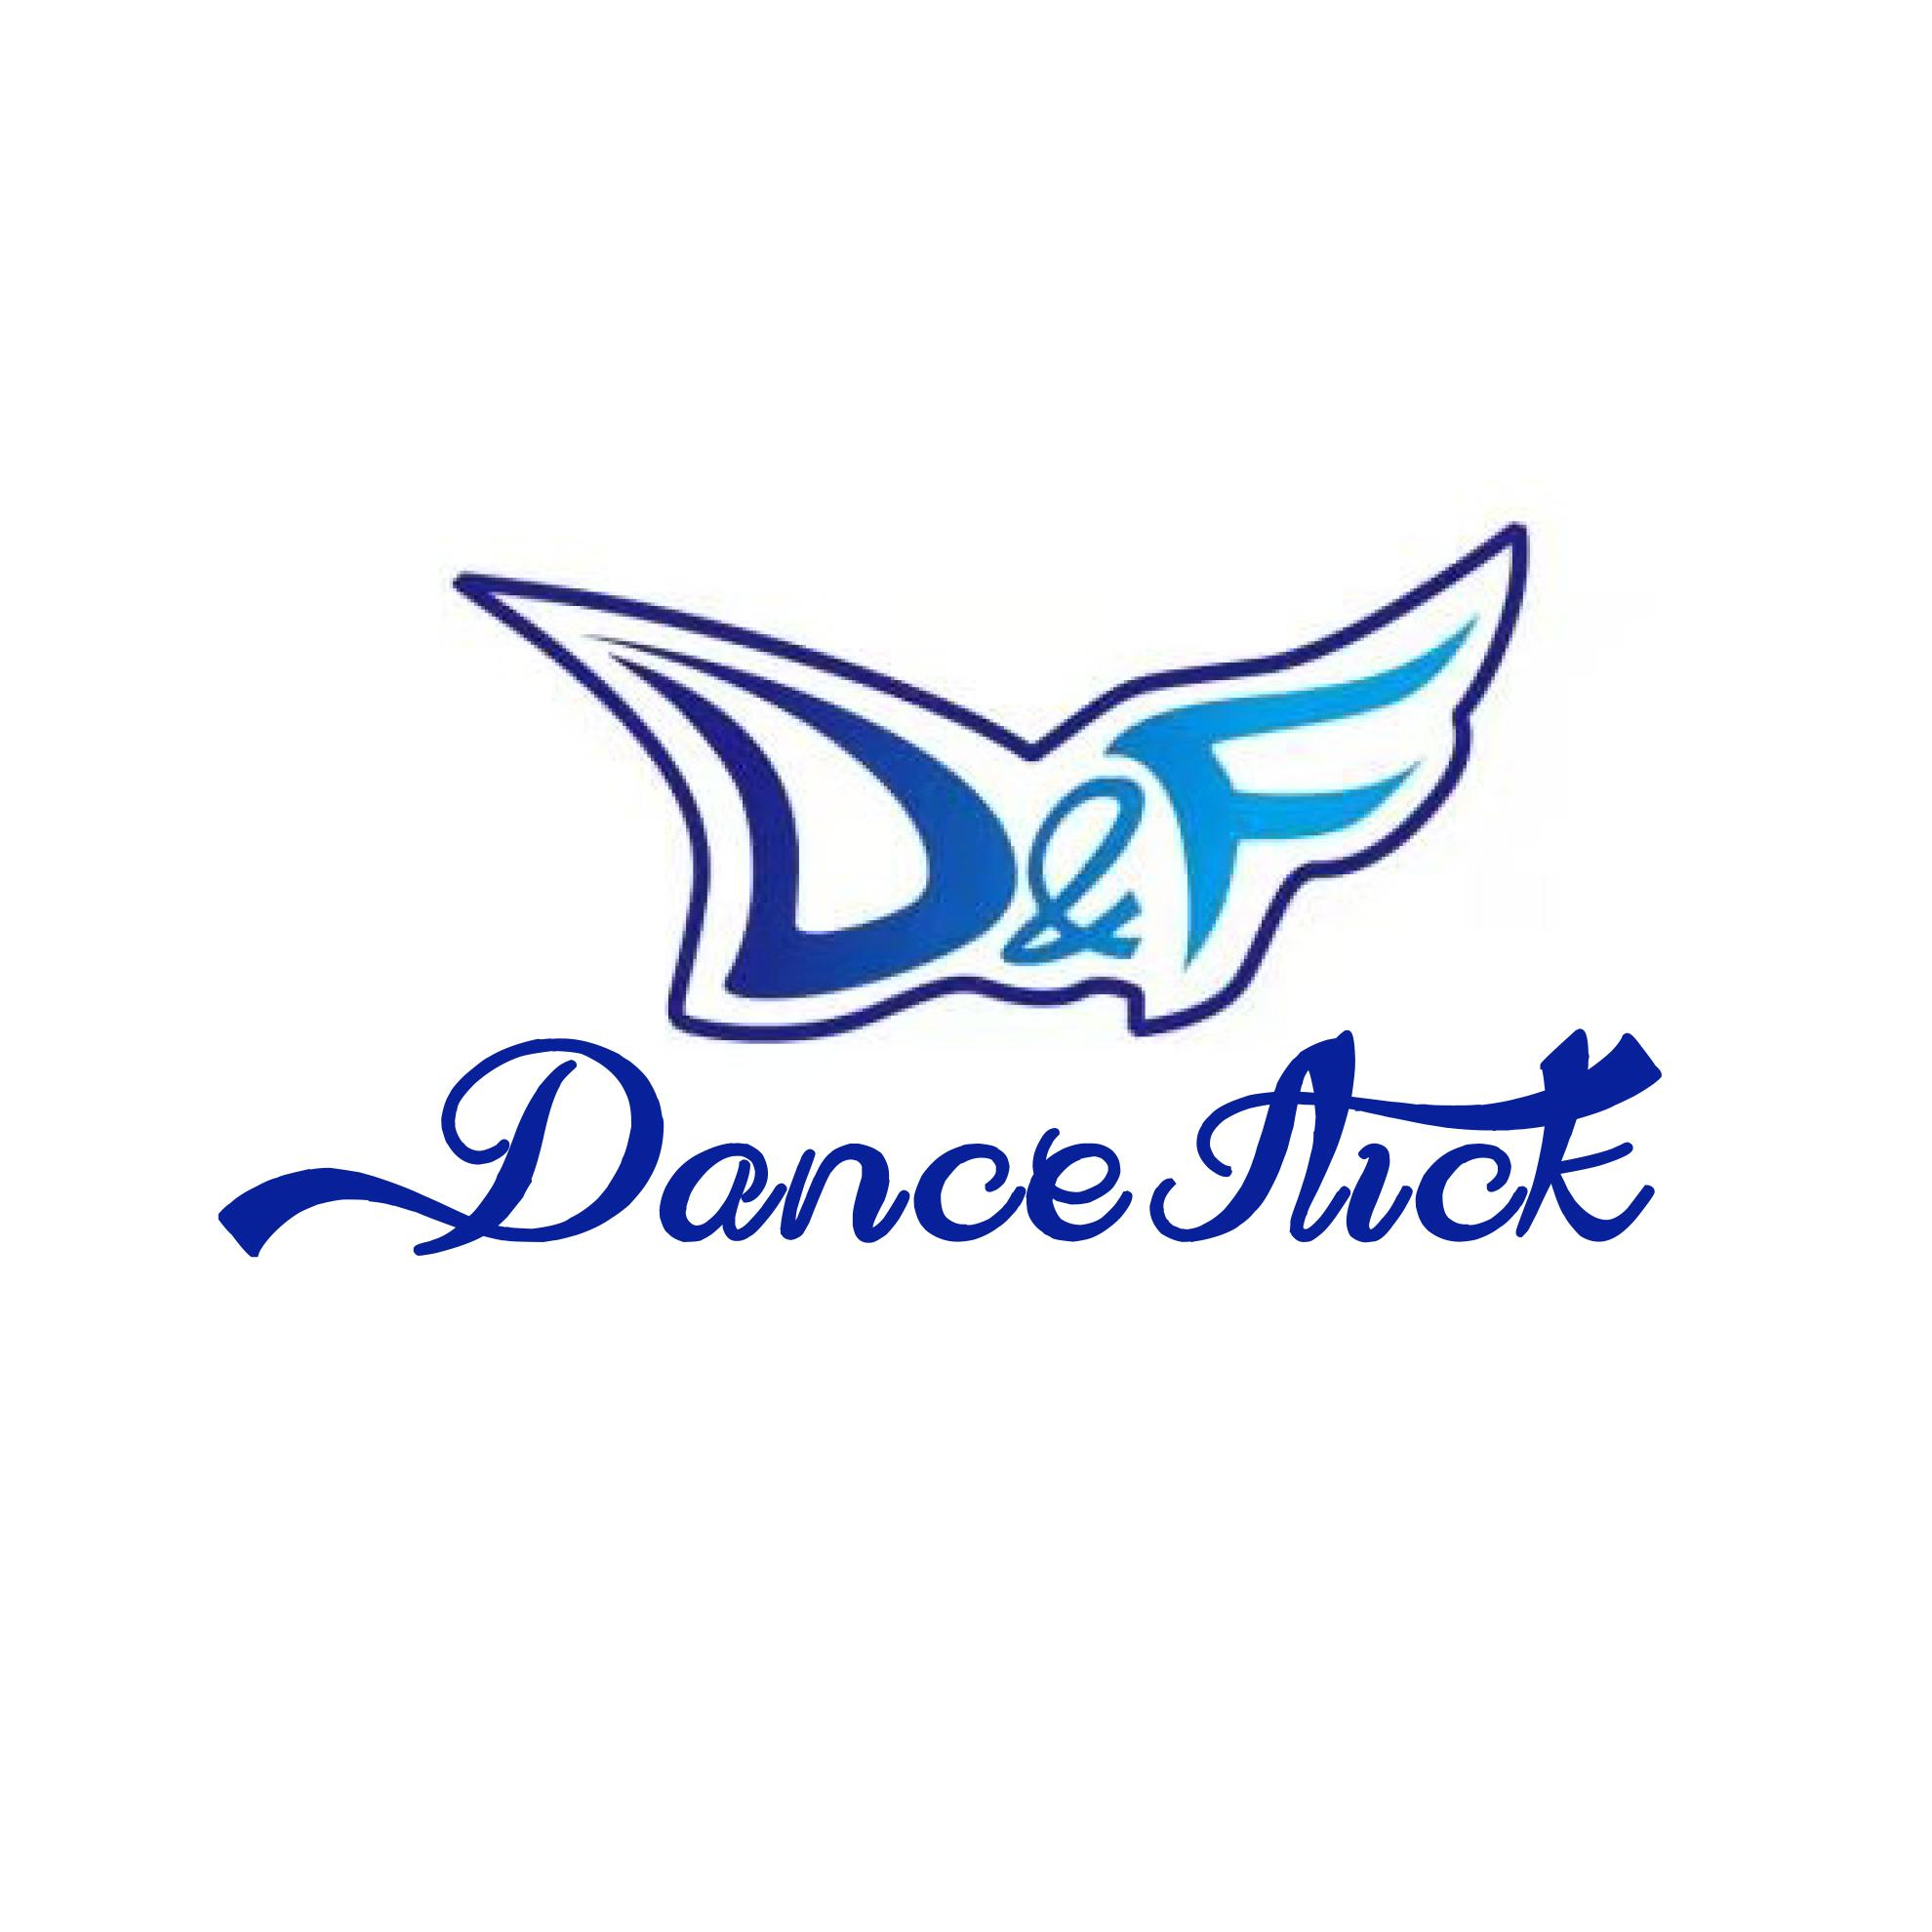 f dance flick商标注册号 52519420,商标申请人重庆市轻舞飞扬体育